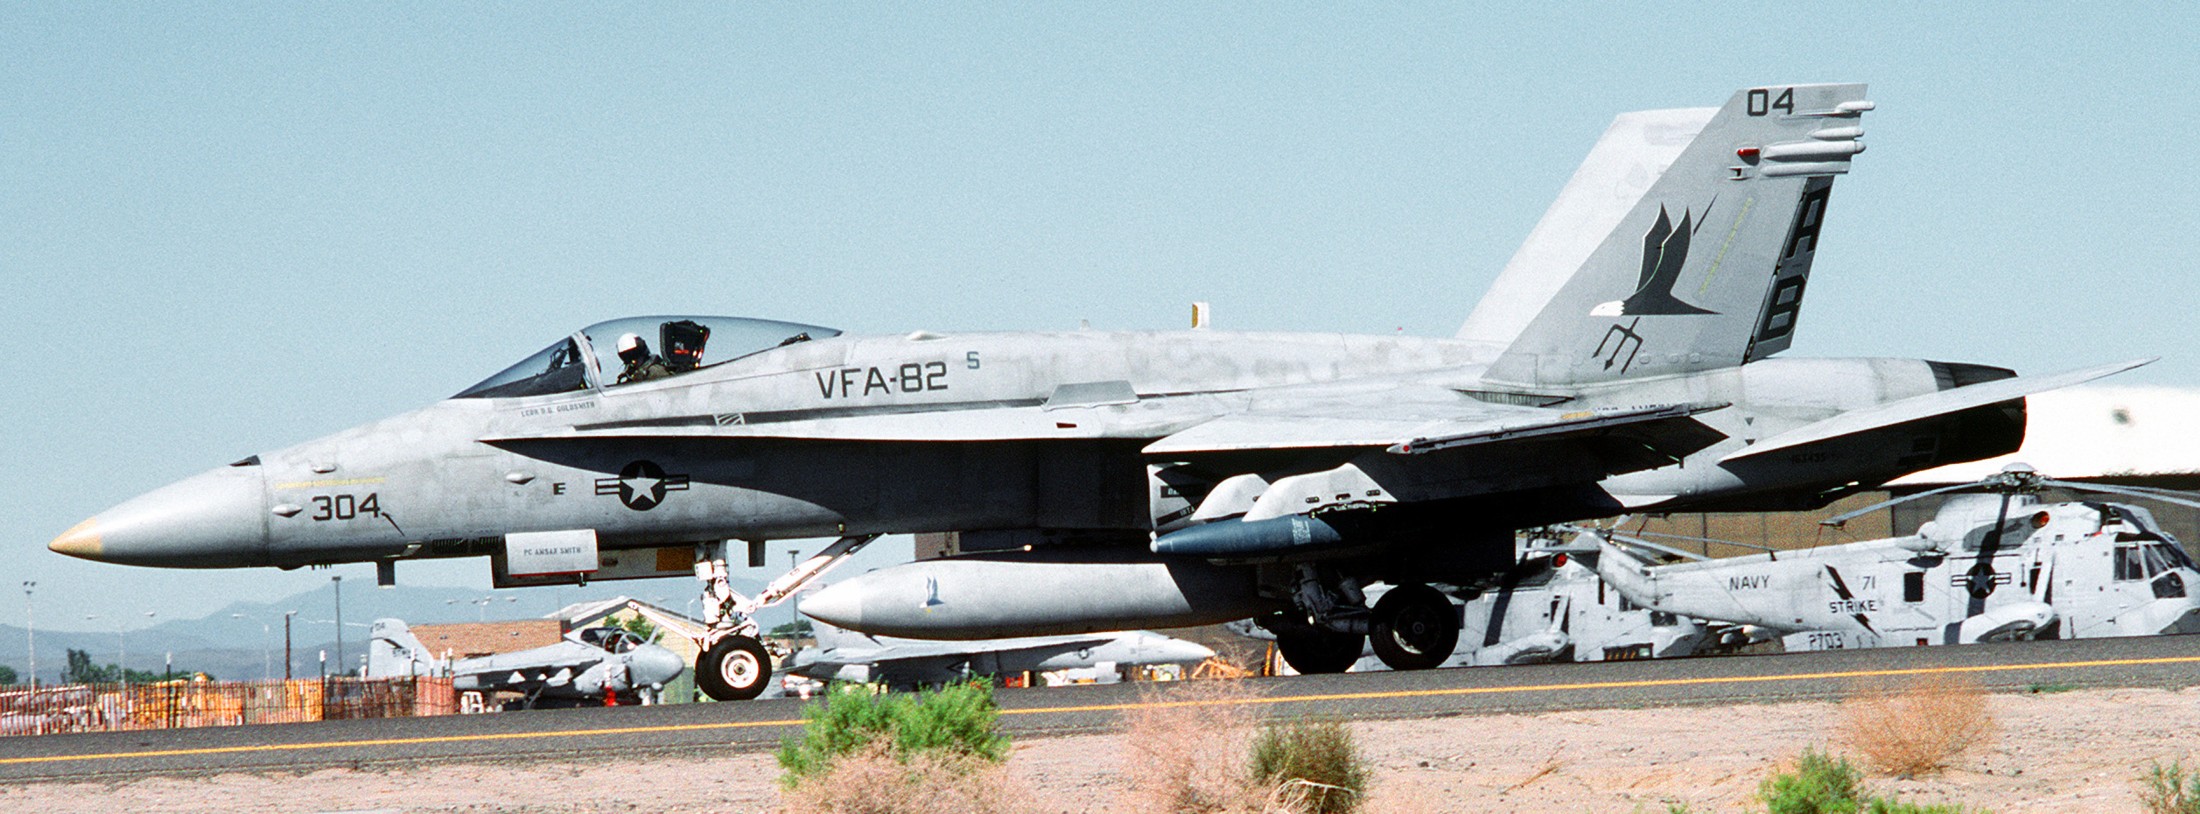 vfa-82 marauders strike fighter squadron f/a-18c hornet cvw-1 uss america cv-66 76